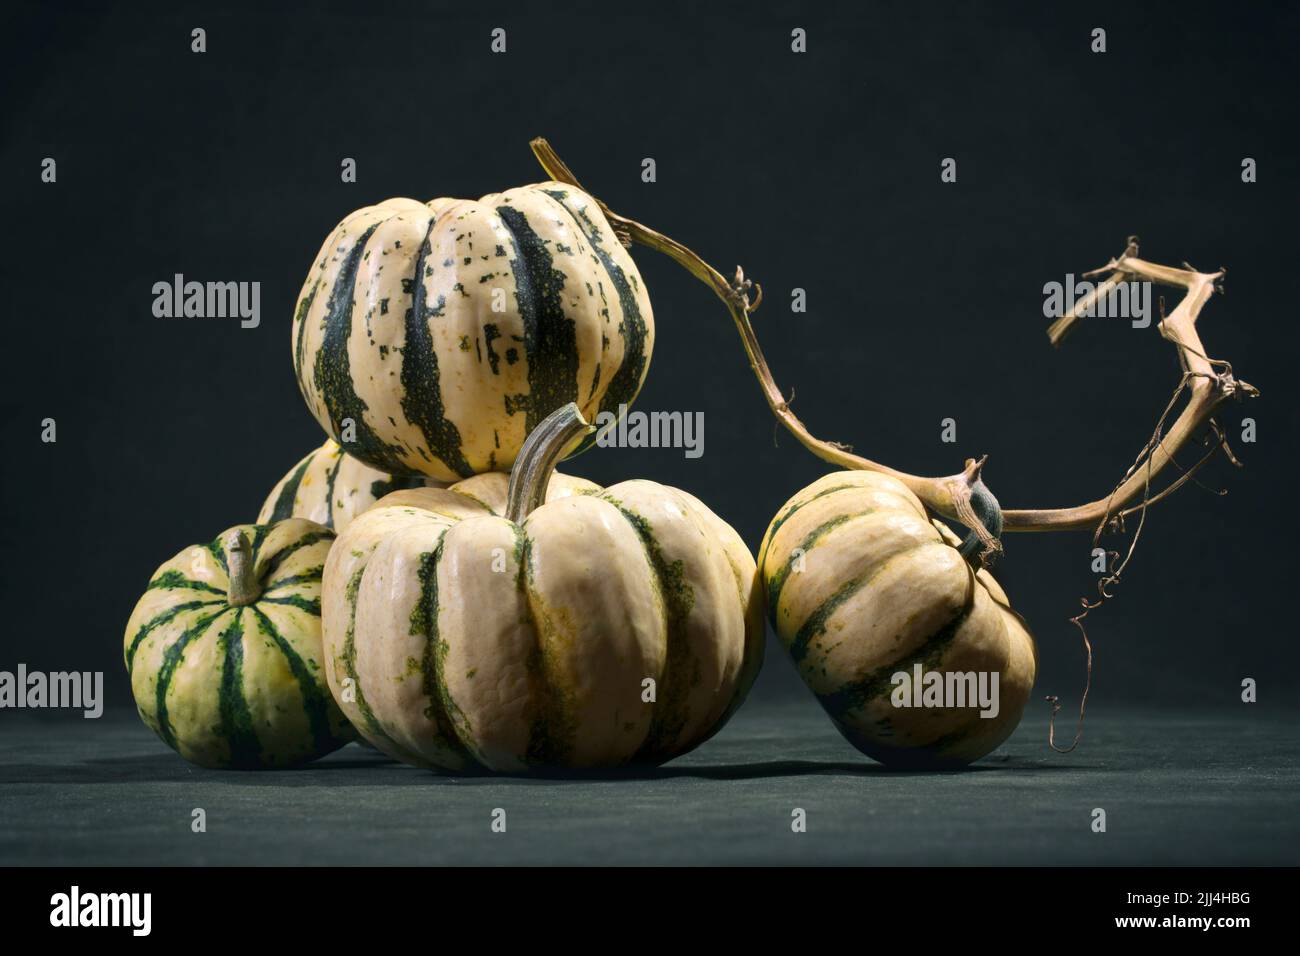 Five striped decorative pumpkins on a dark background Stock Photo